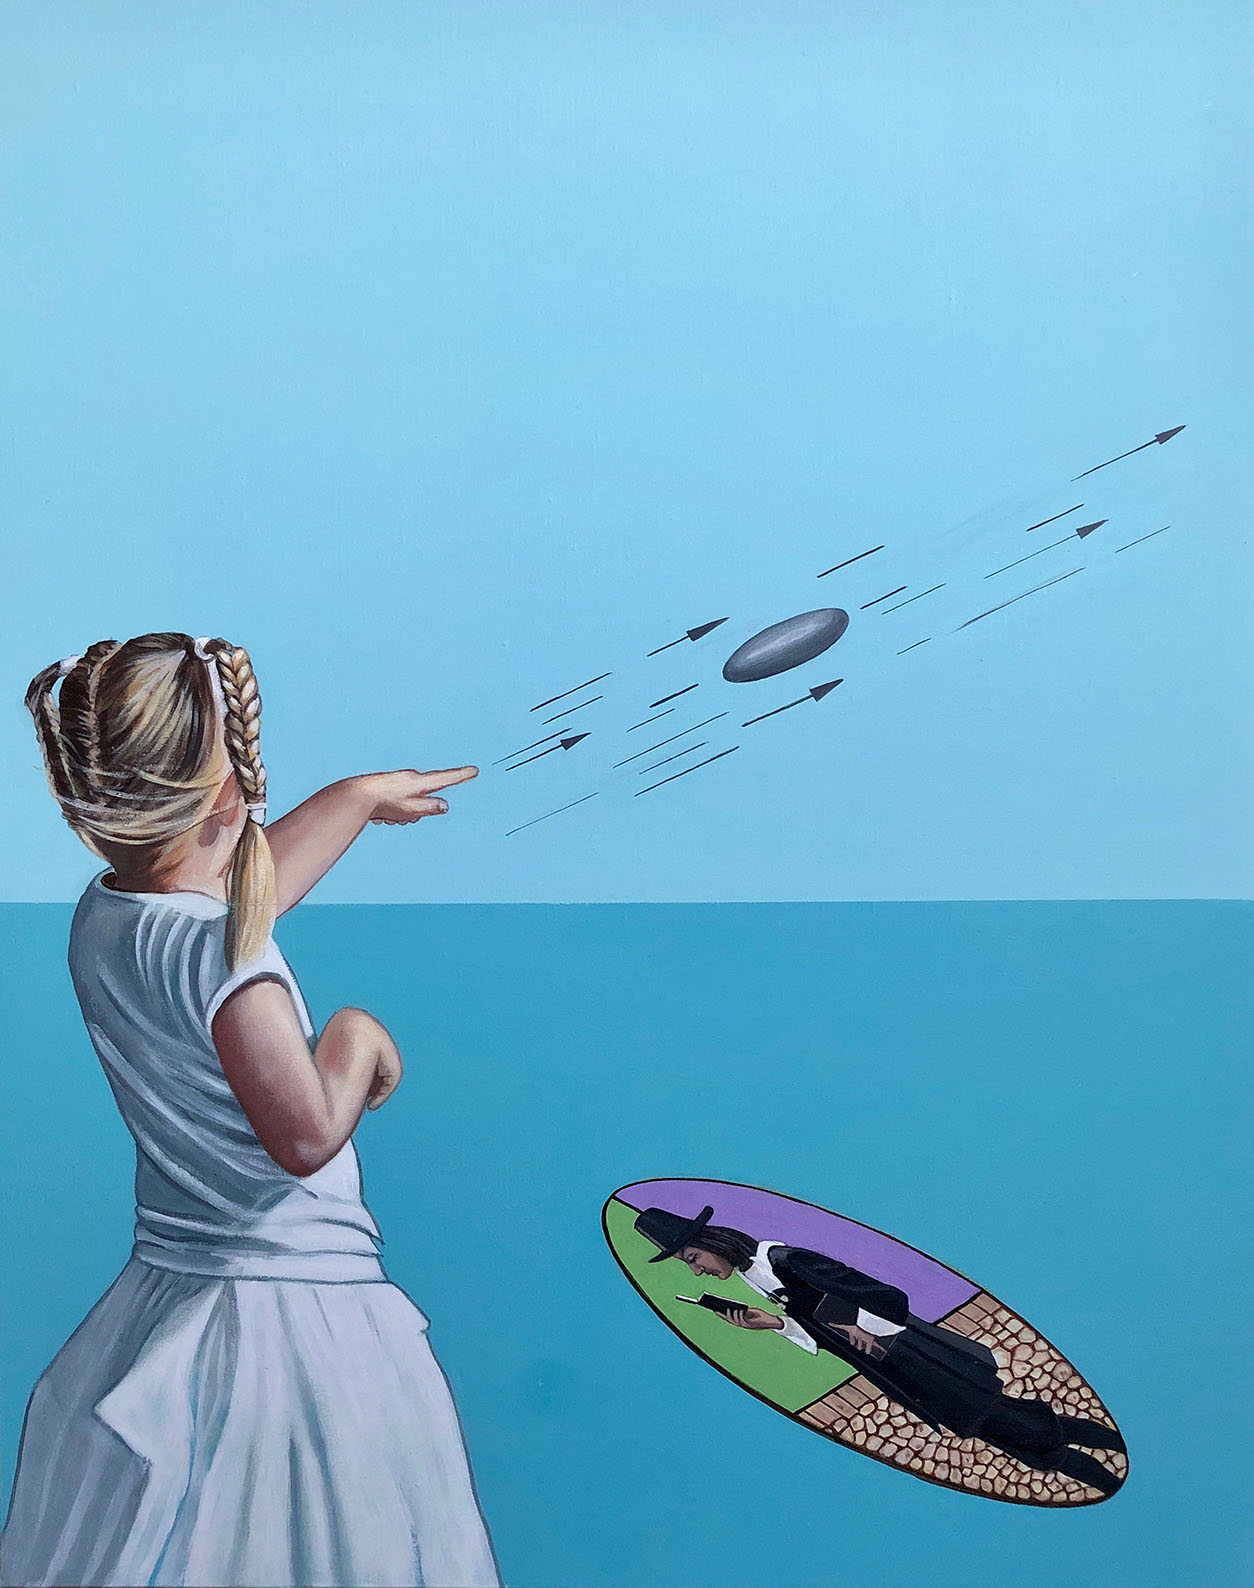 Cristina Ruiz Guinazu, La pierre, acrylics on canvas, 92 x 73 cm, 2019